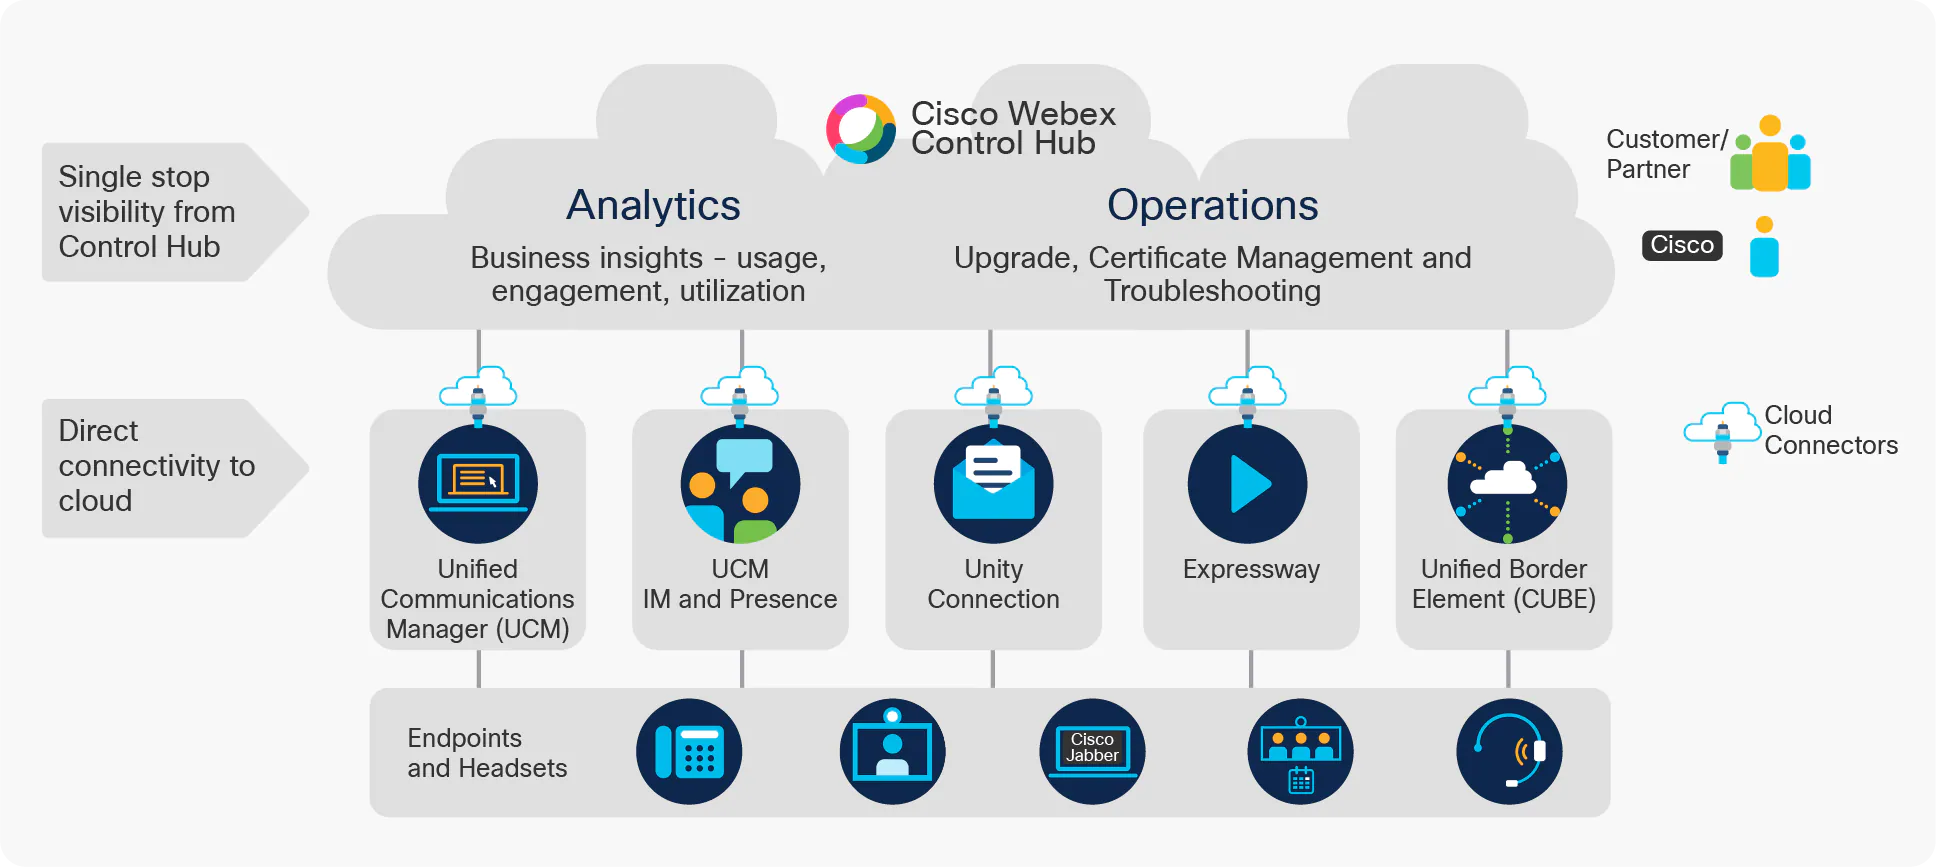 Cisco Webex Control Hub